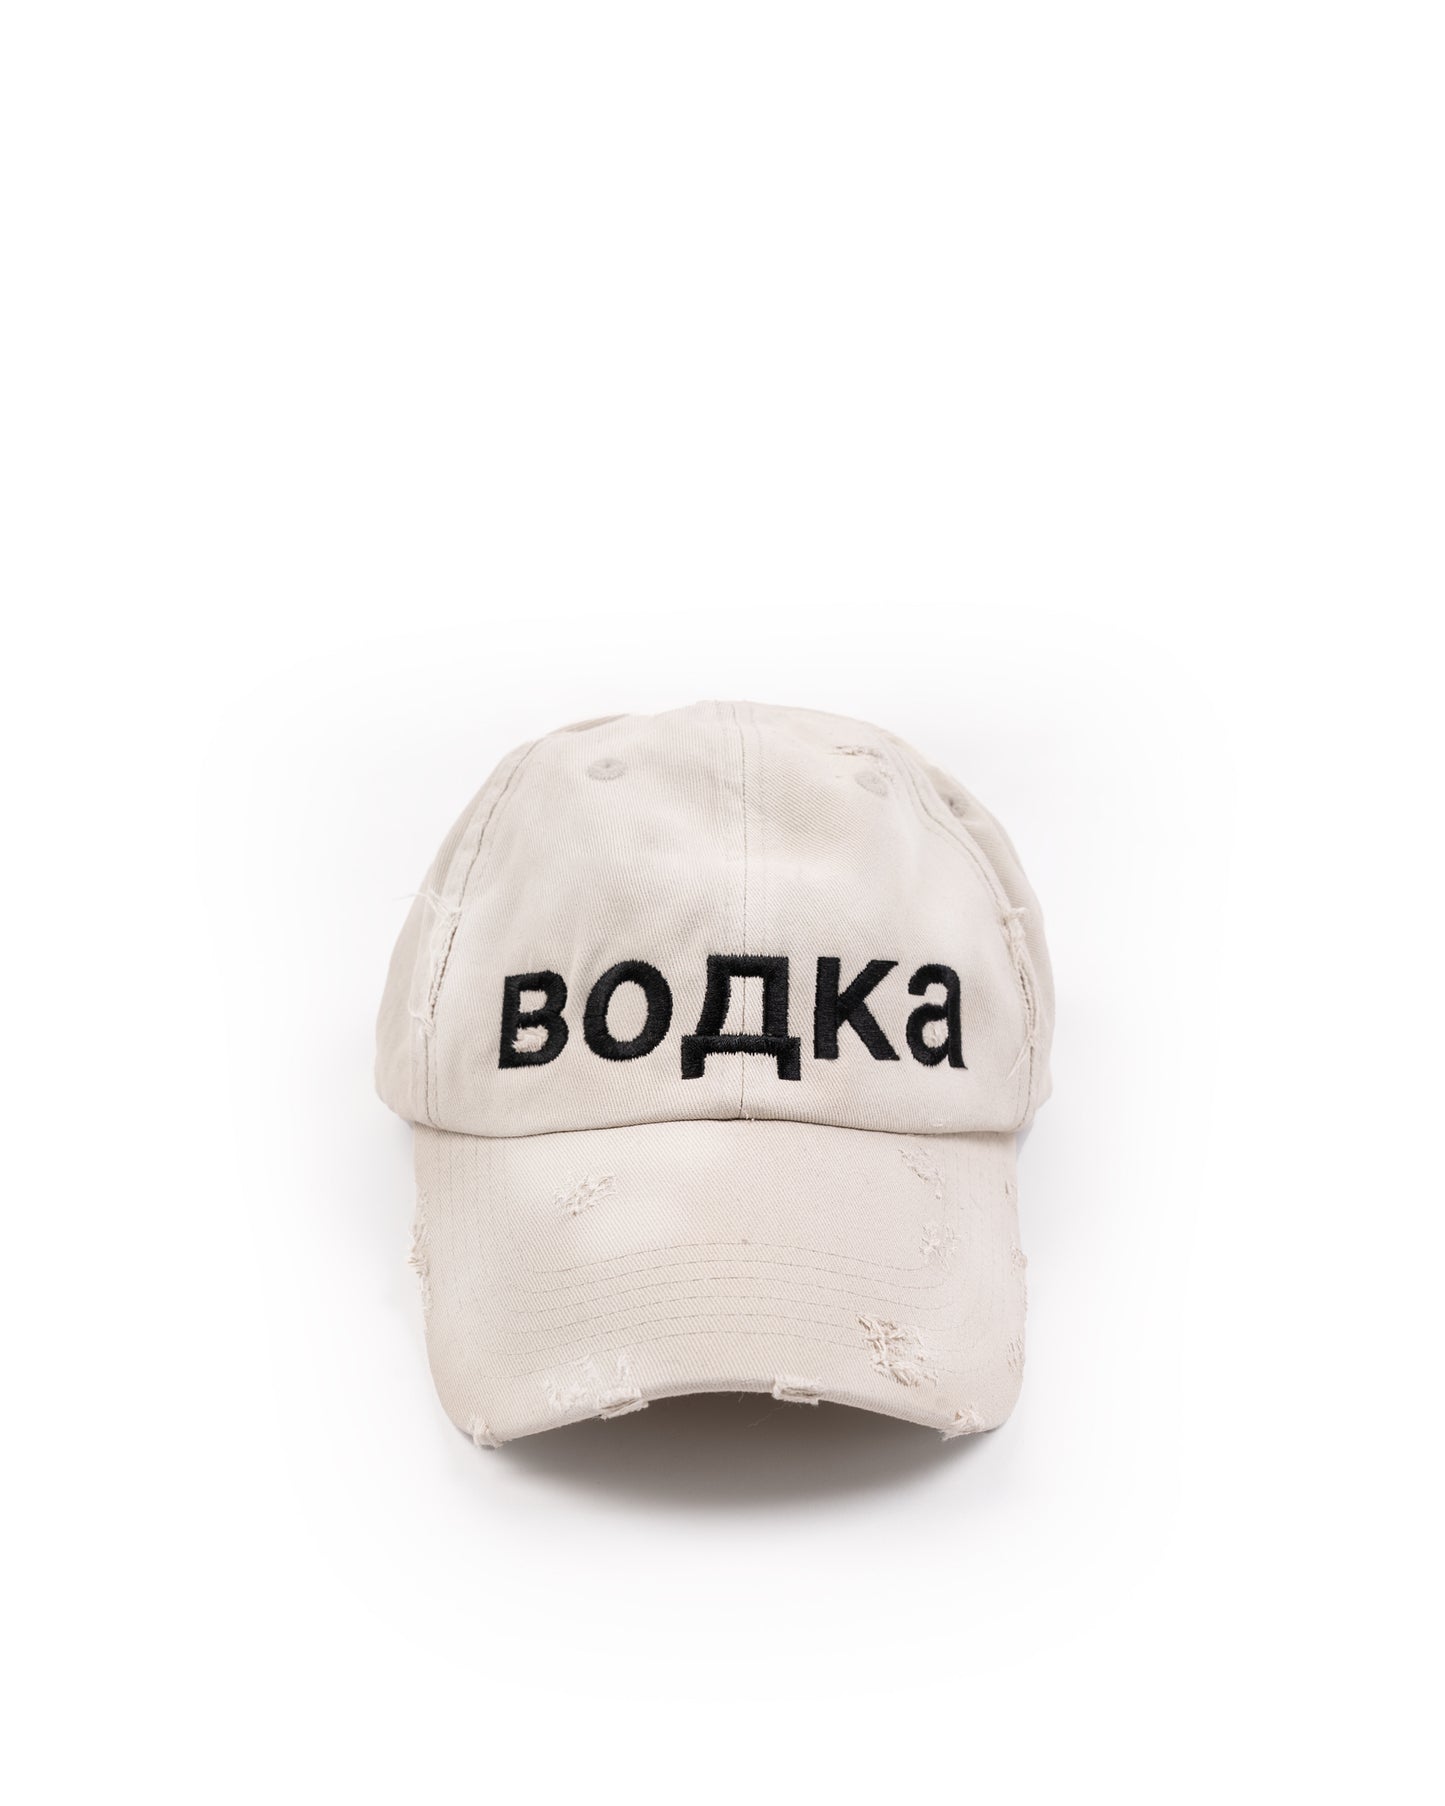 Bodka Cap: Vintage White